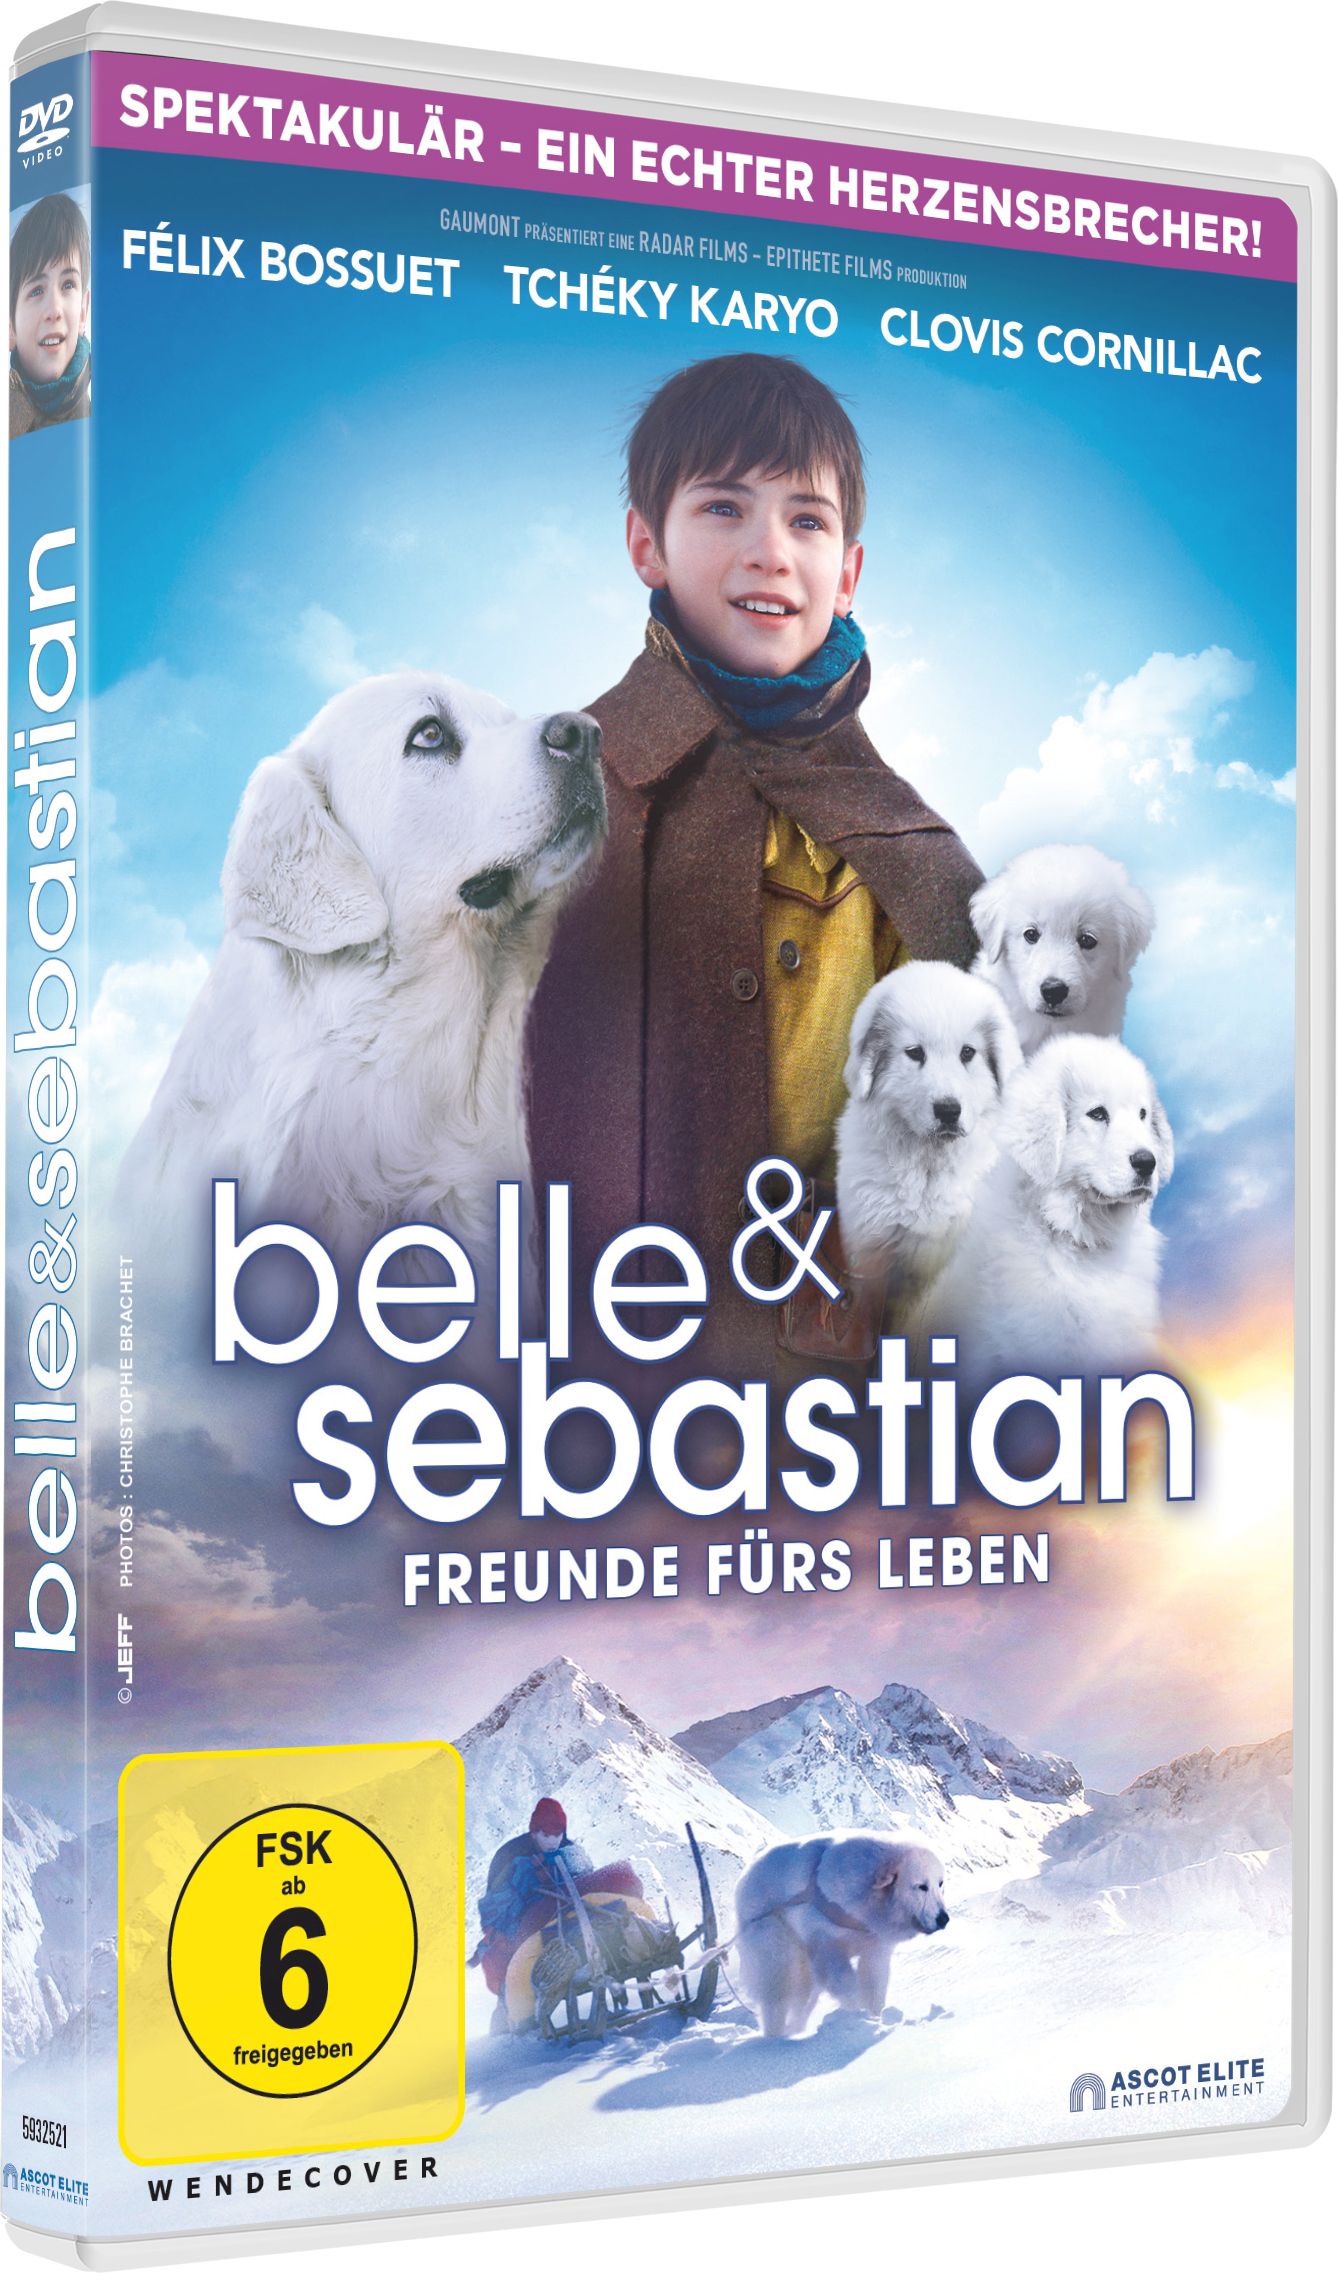 Belle & Sebastian - Freunde fürs Leben 